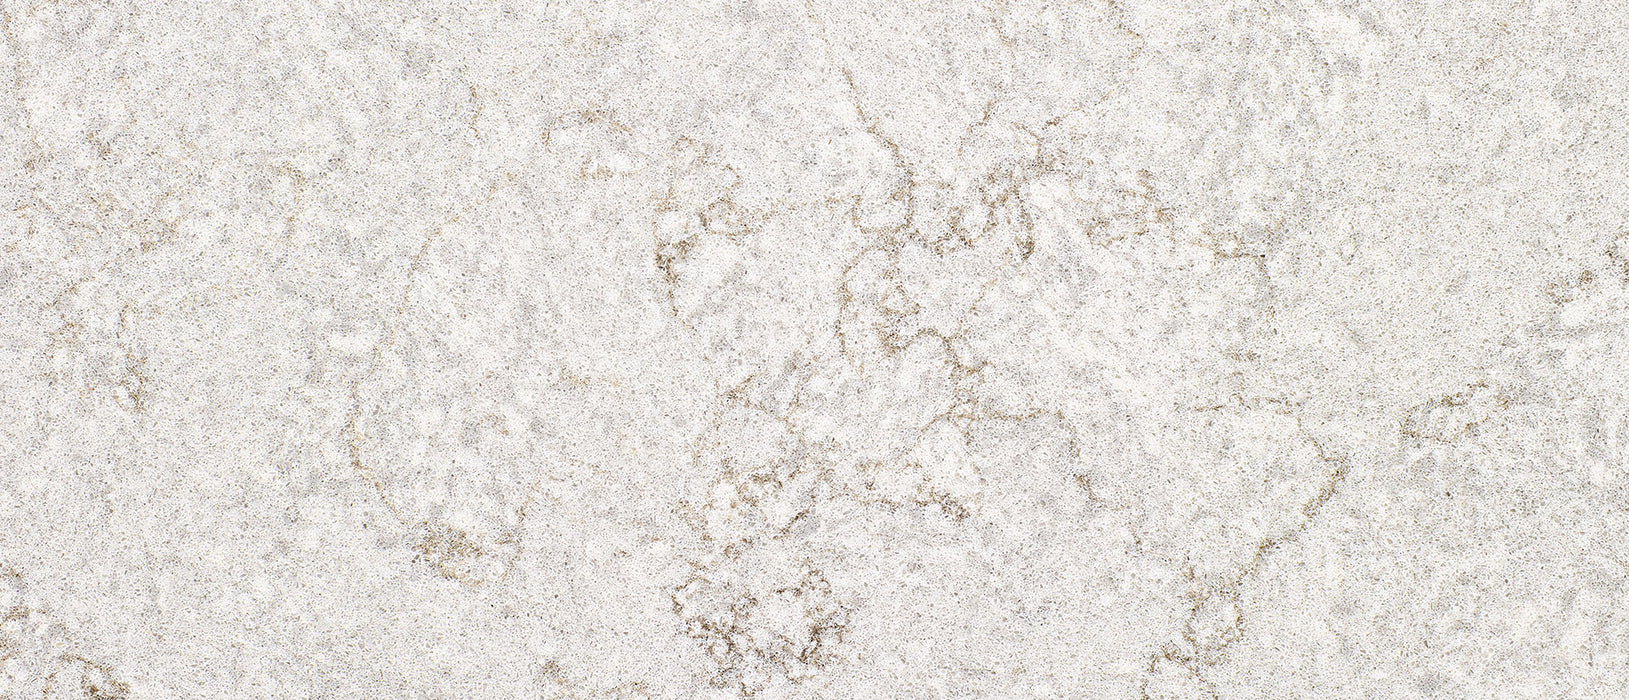 Gray Lagoon Concrete quartz countertop close up